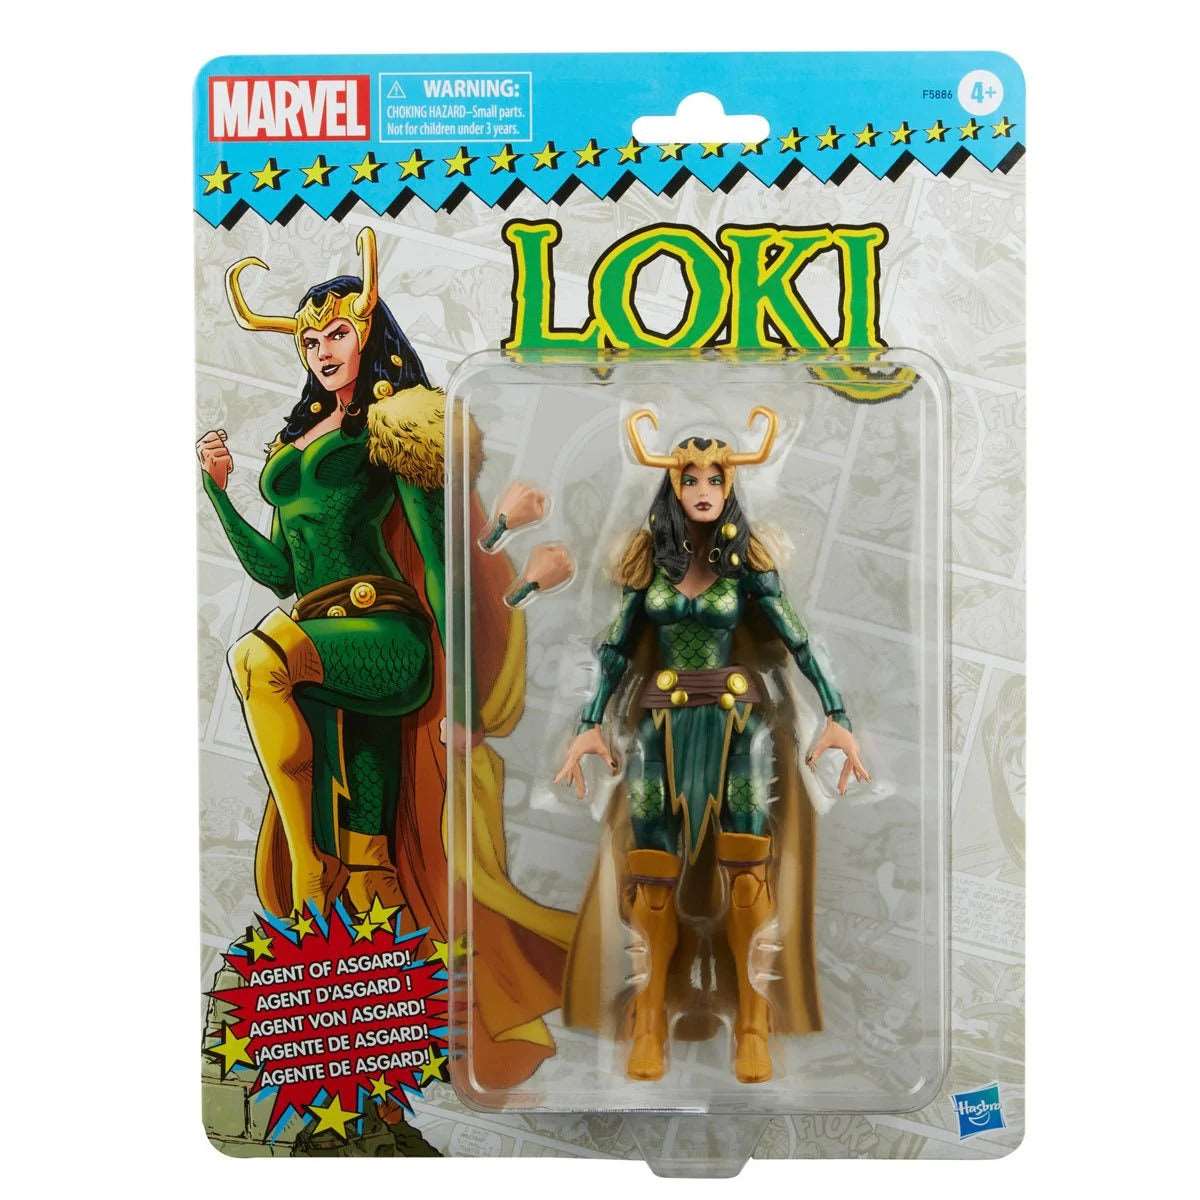 marvel legends series retro agent of asgard lady loki figure on blister card